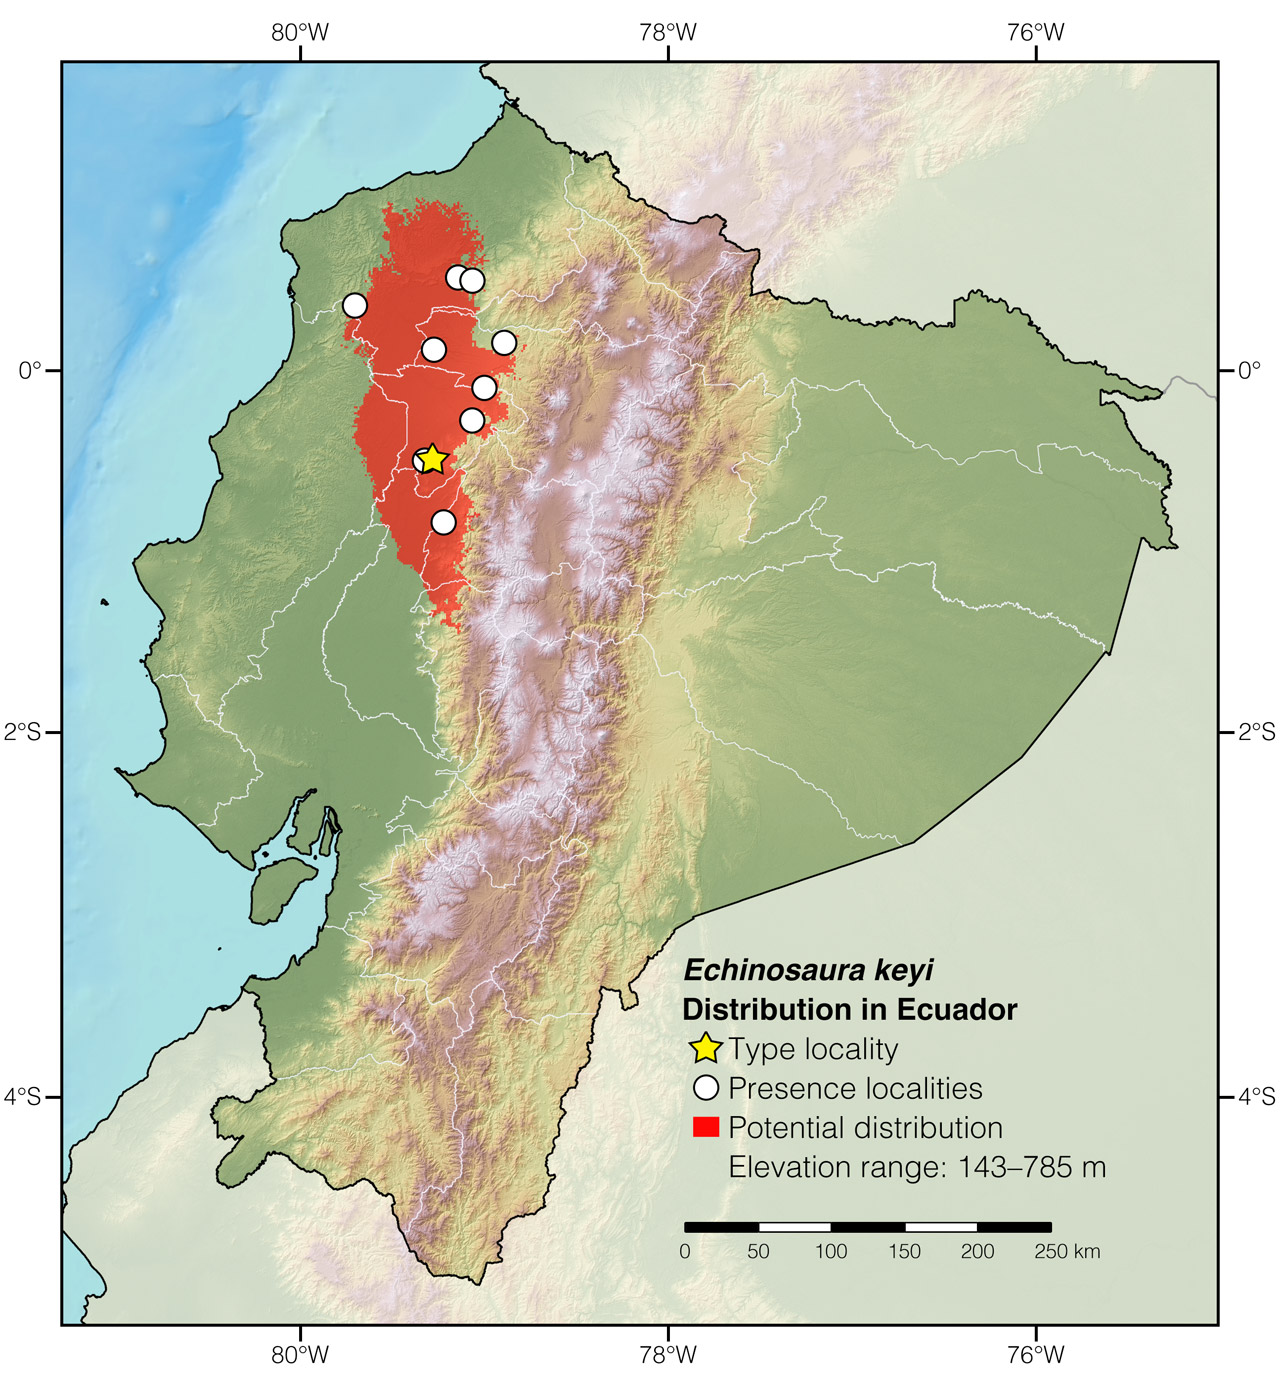 Distribution of Echinosaura keyi in Ecuador